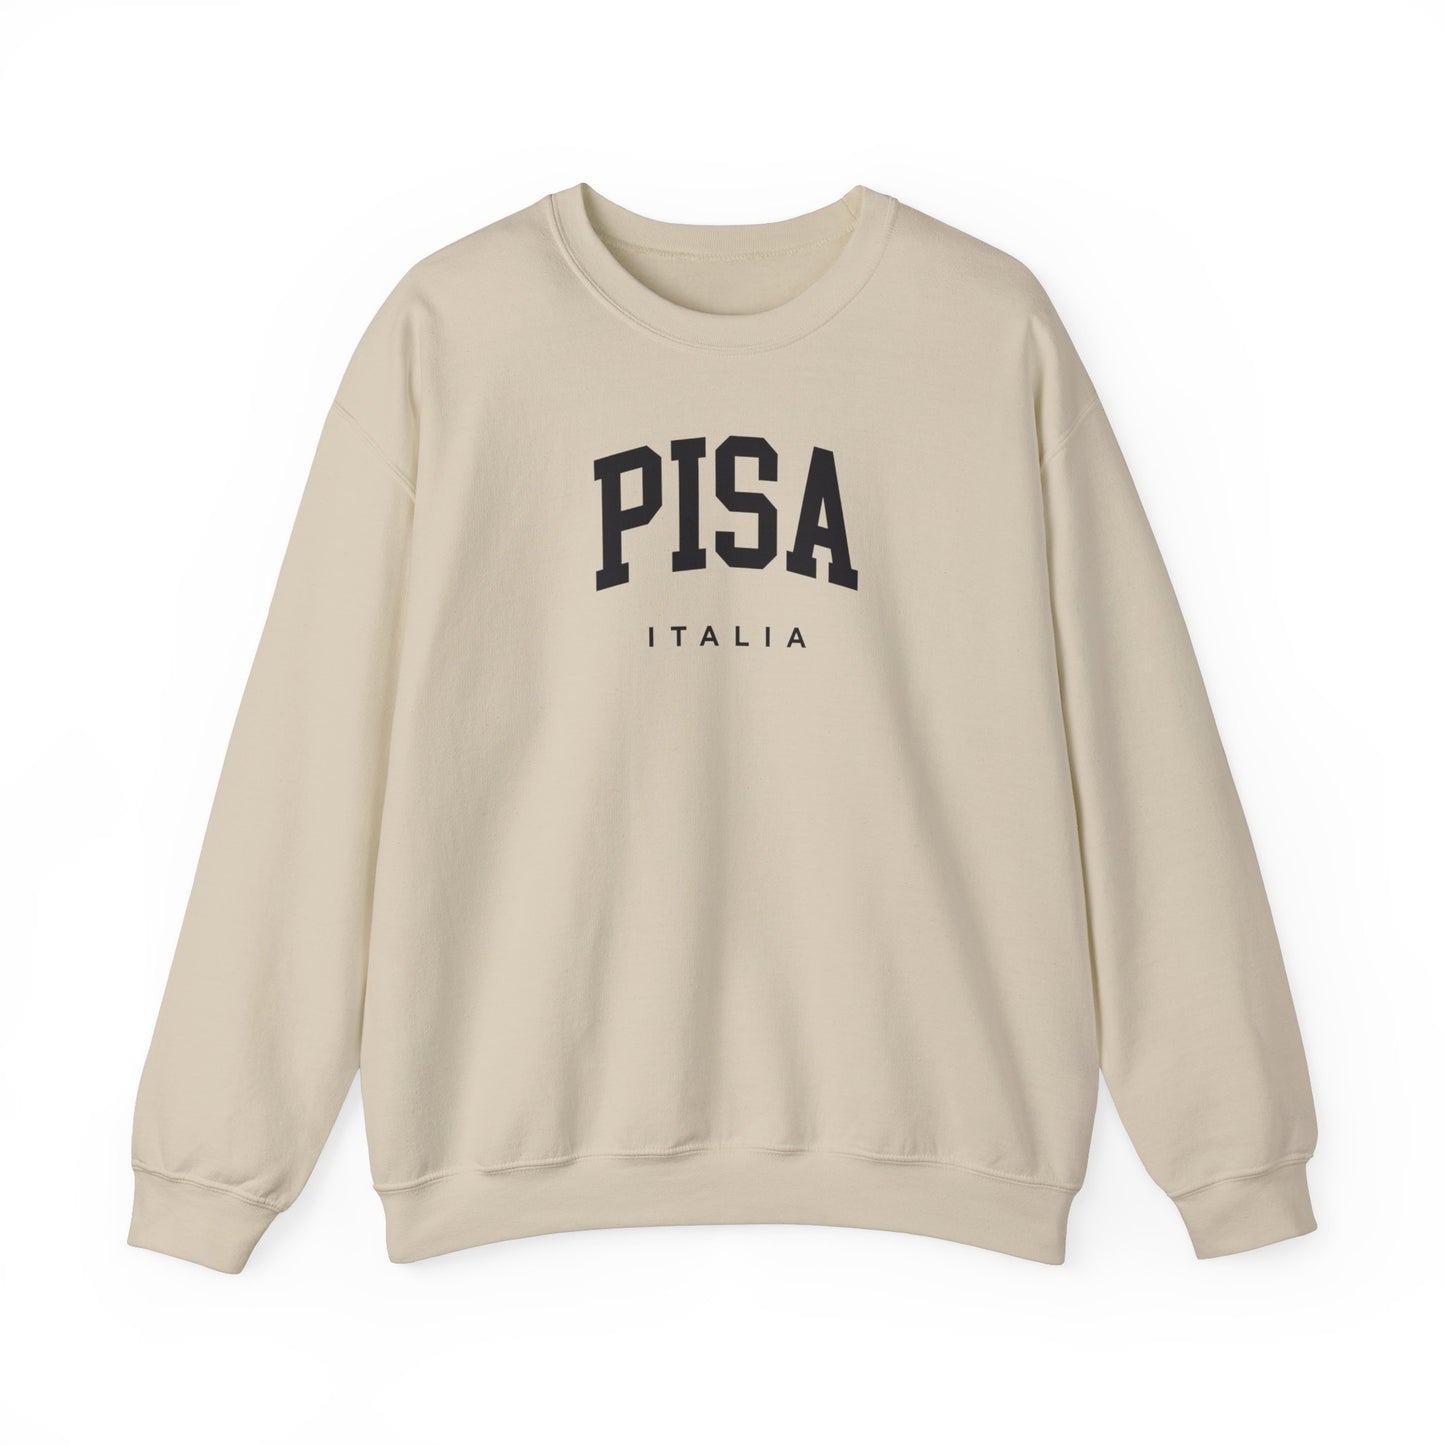 Pisa Italy Sweatshirt